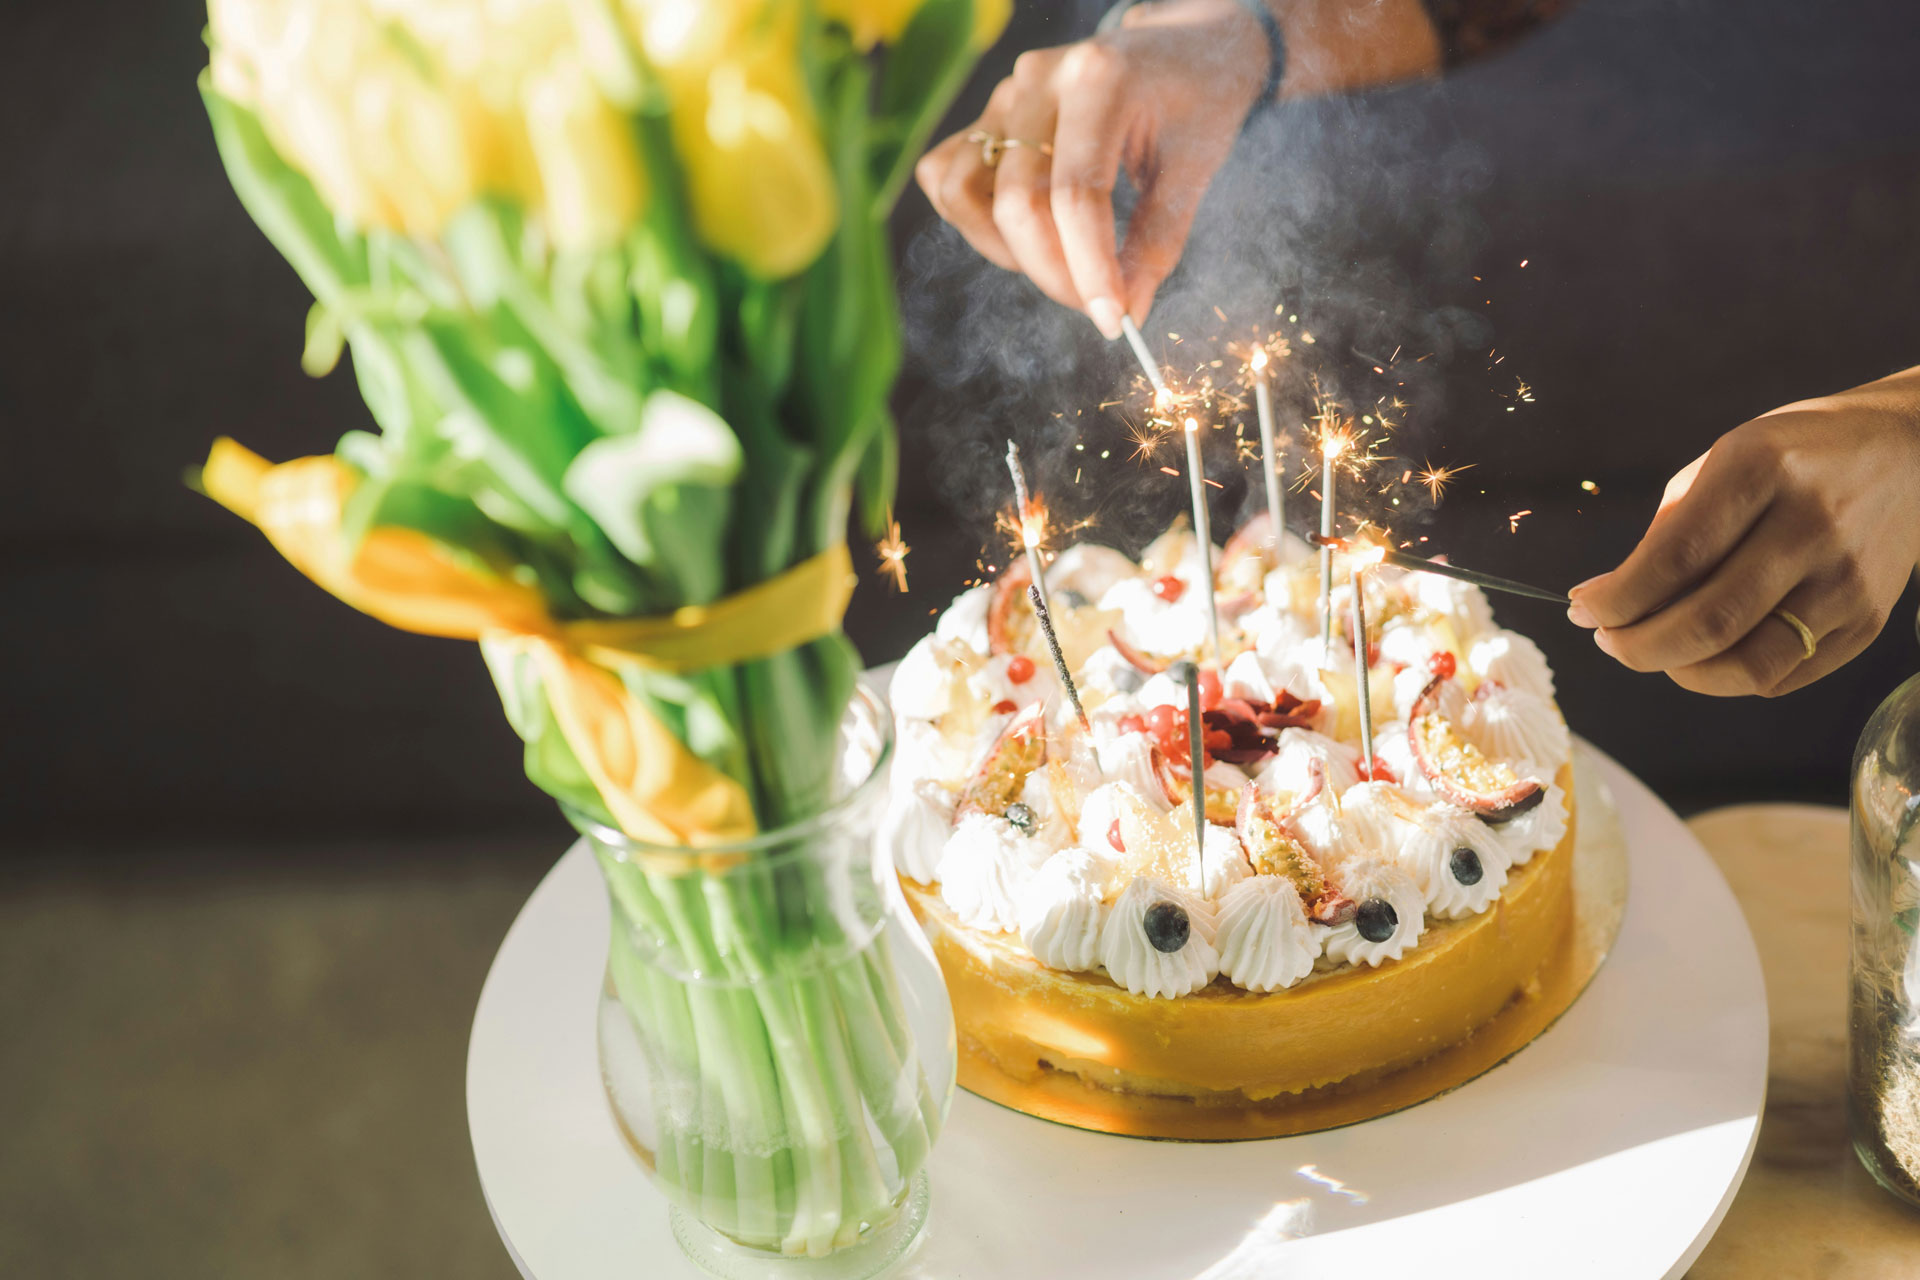 Burn-Away Cakes Are Taking Over TikTok